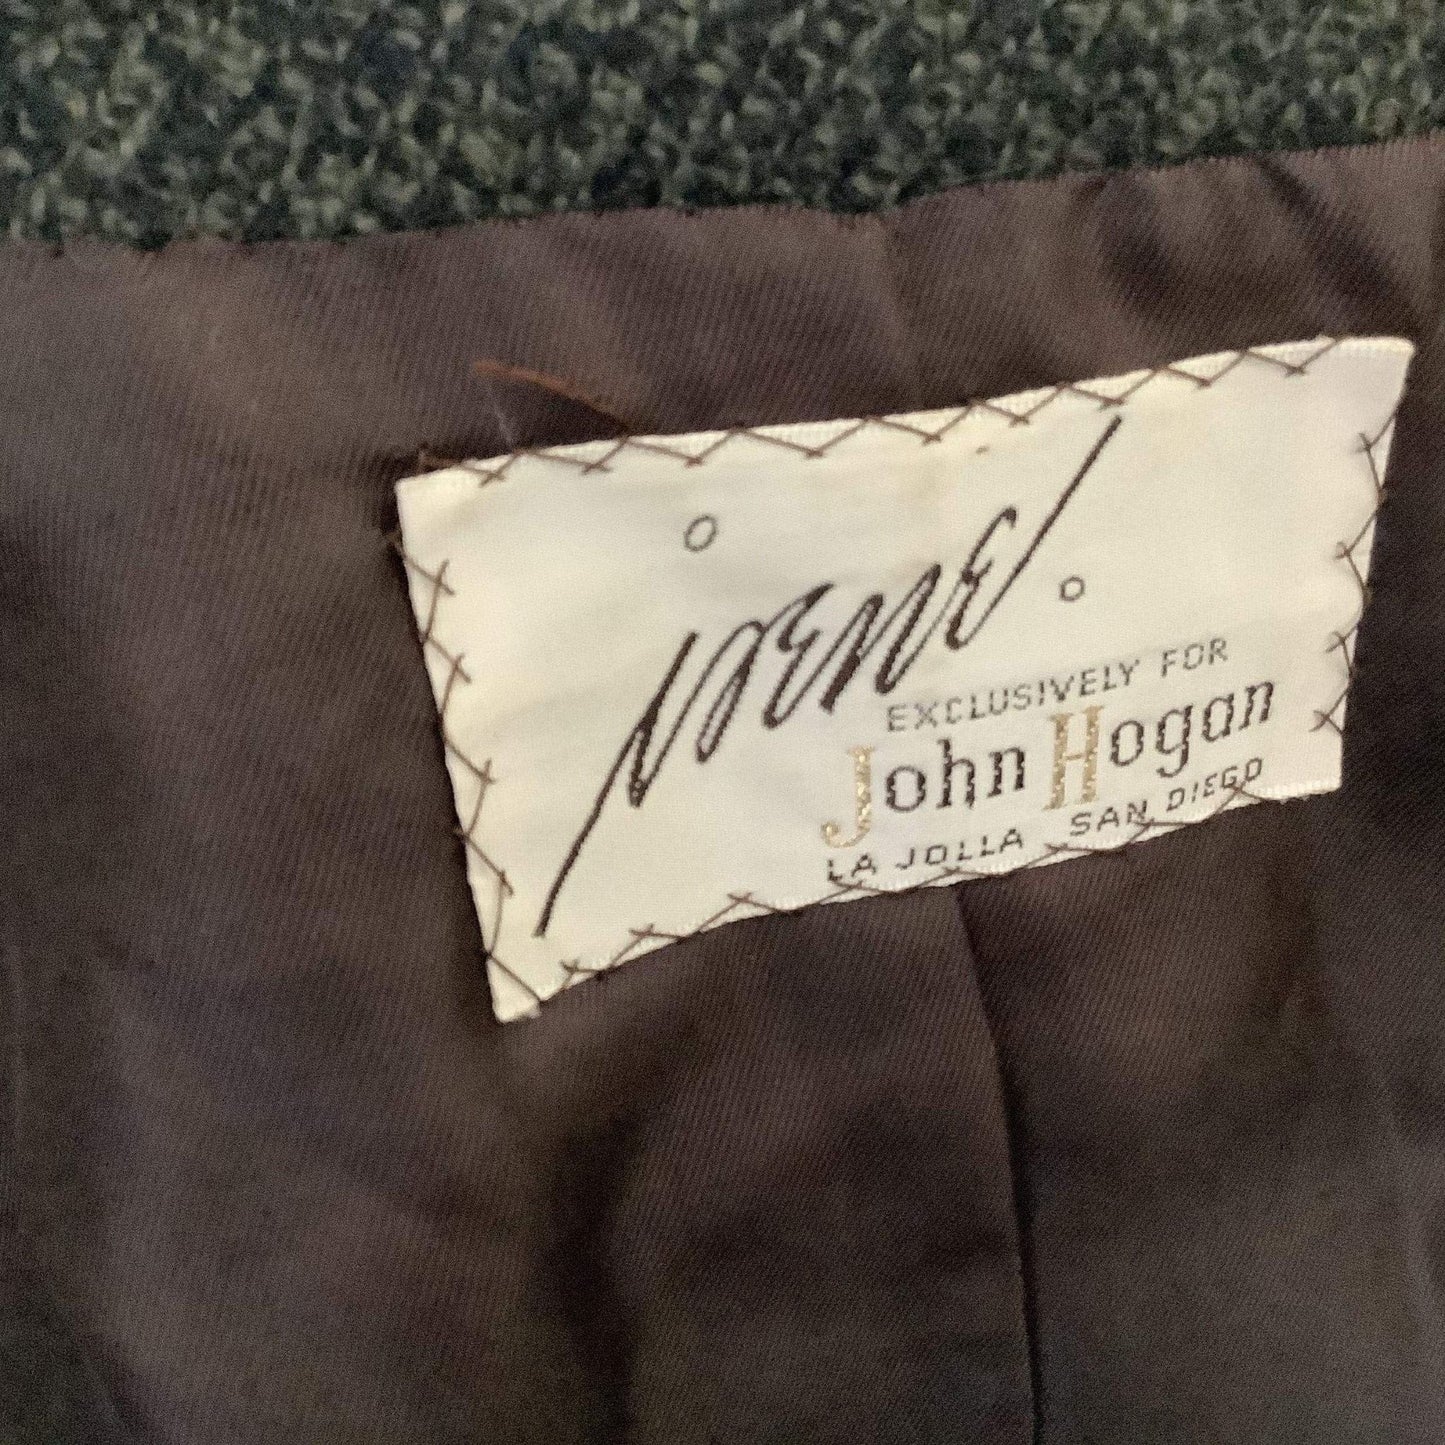 Vintage John Hogan Jacket Small / Gray / Vintage 1980s